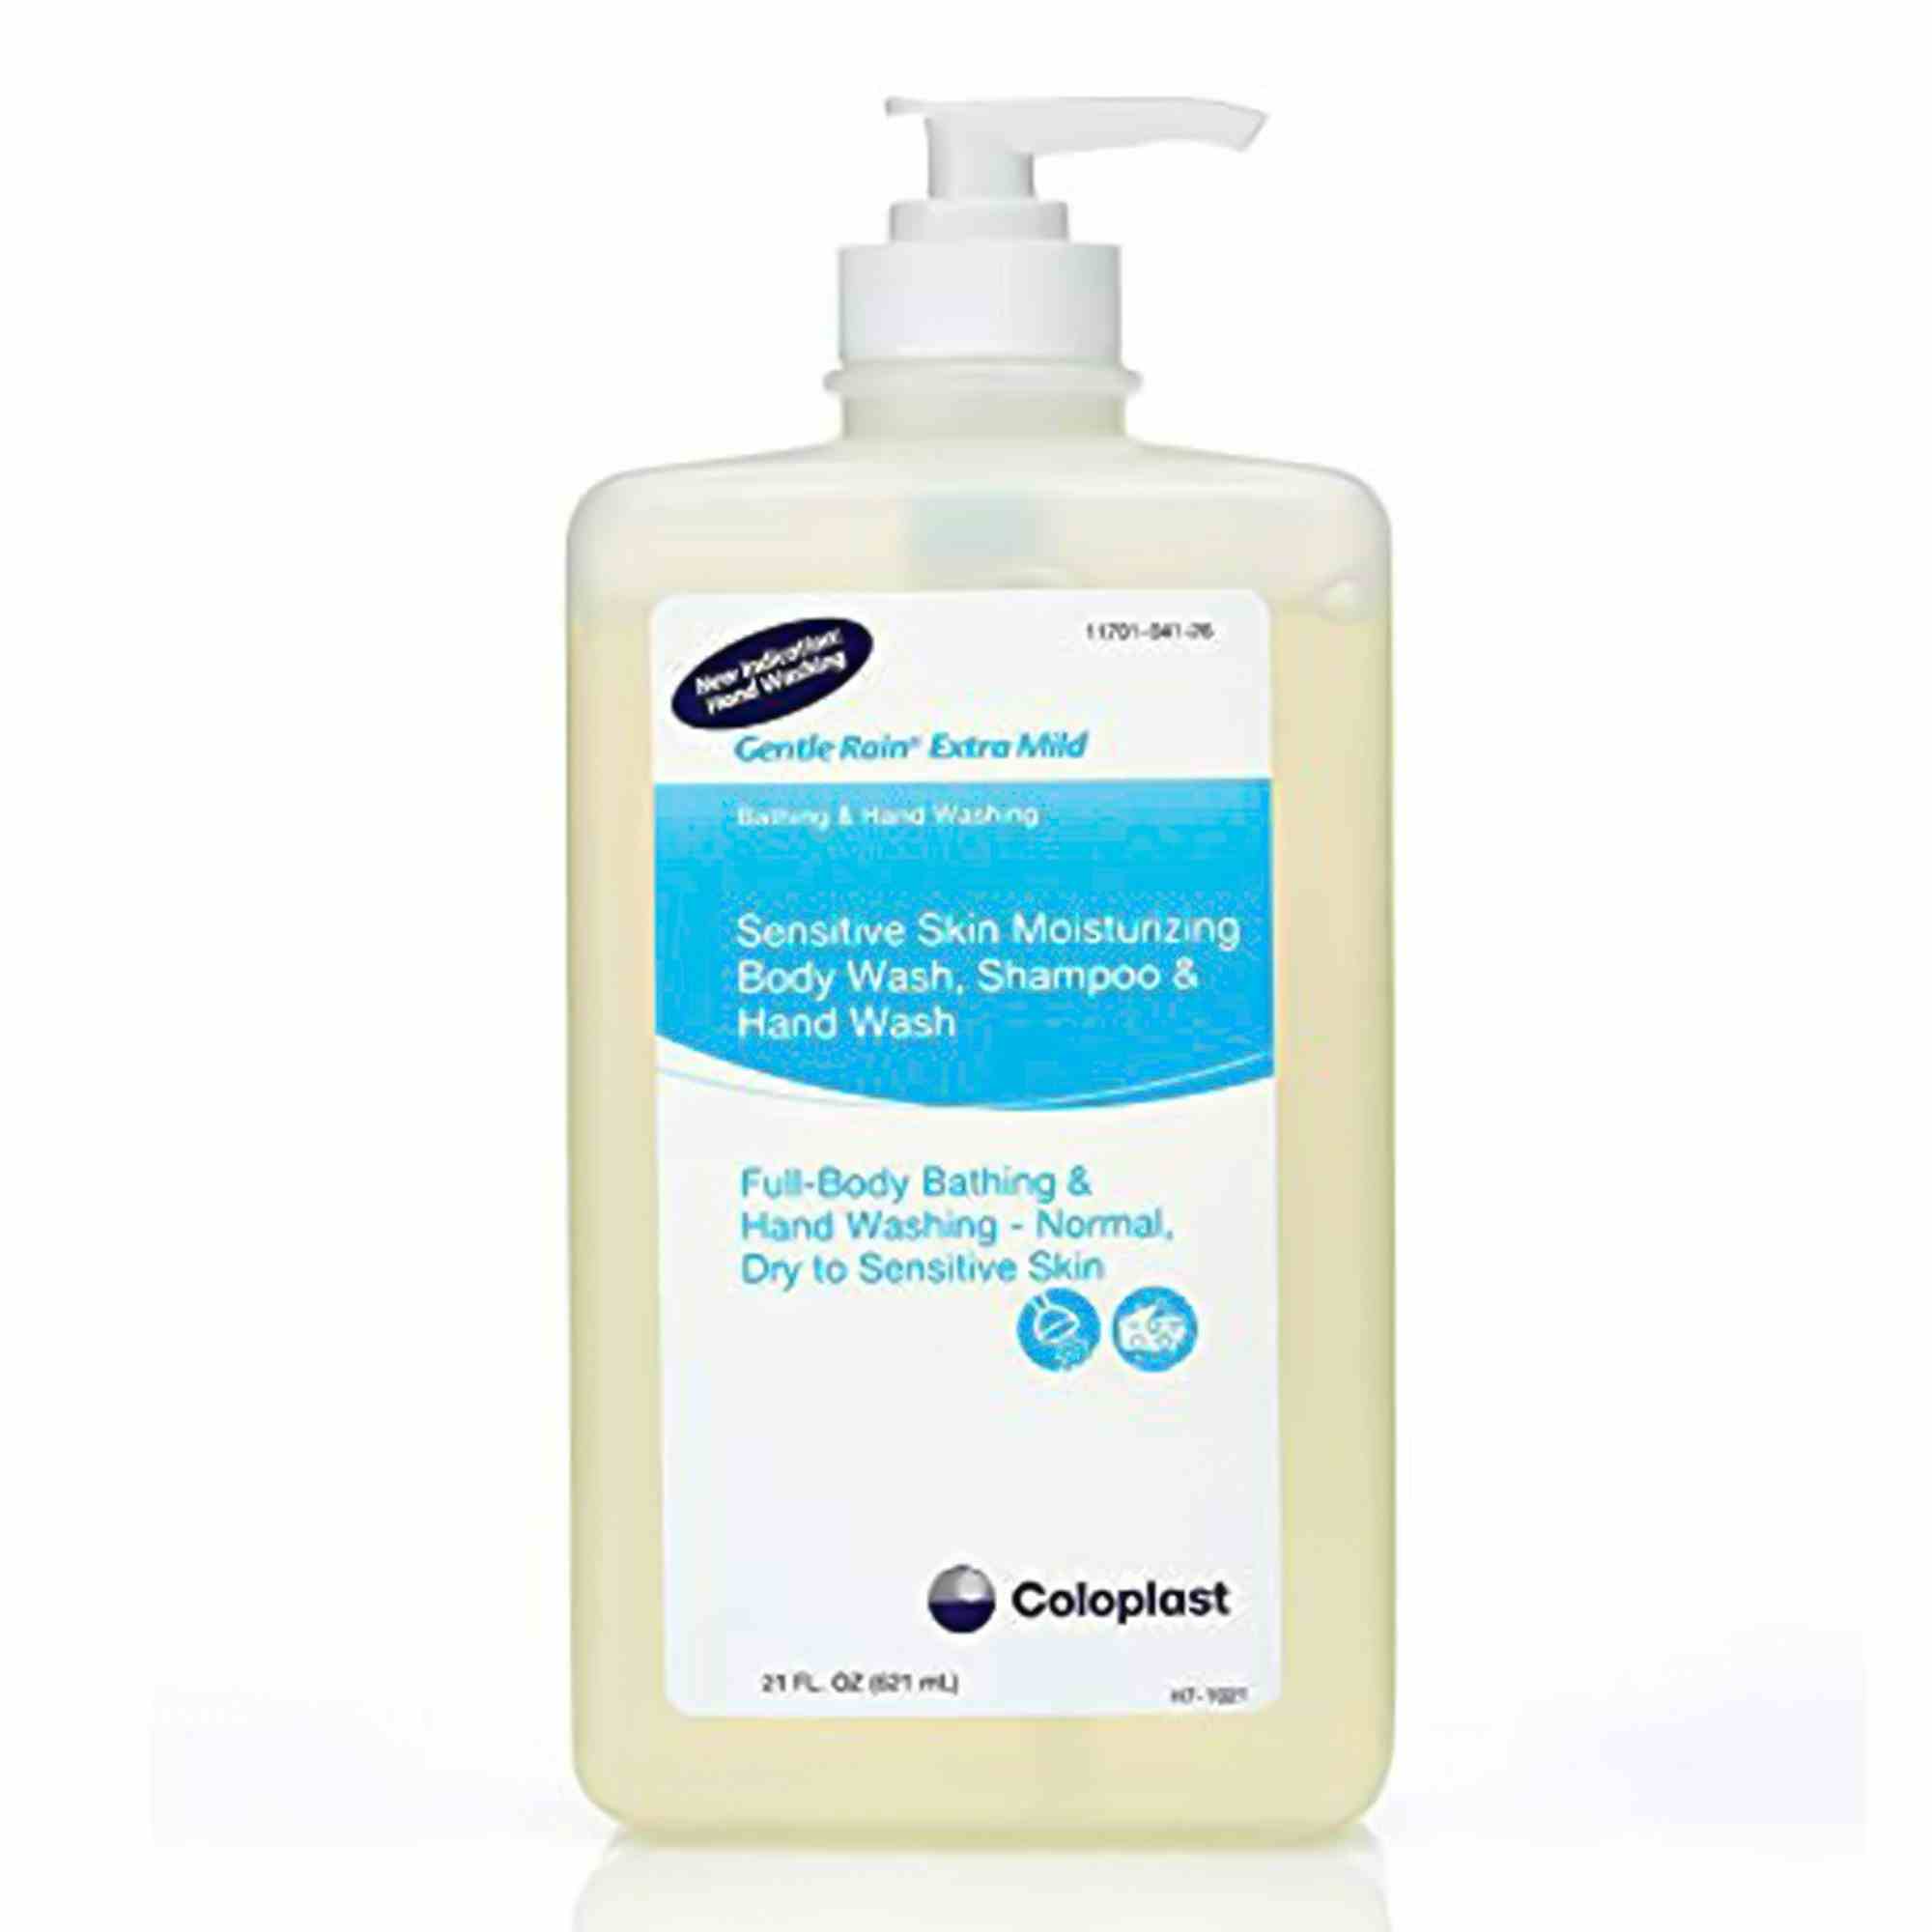 Coloplast Gentle Rain Shampoo and Body Wash, Scented, 7233, 21 oz. - 1 Each